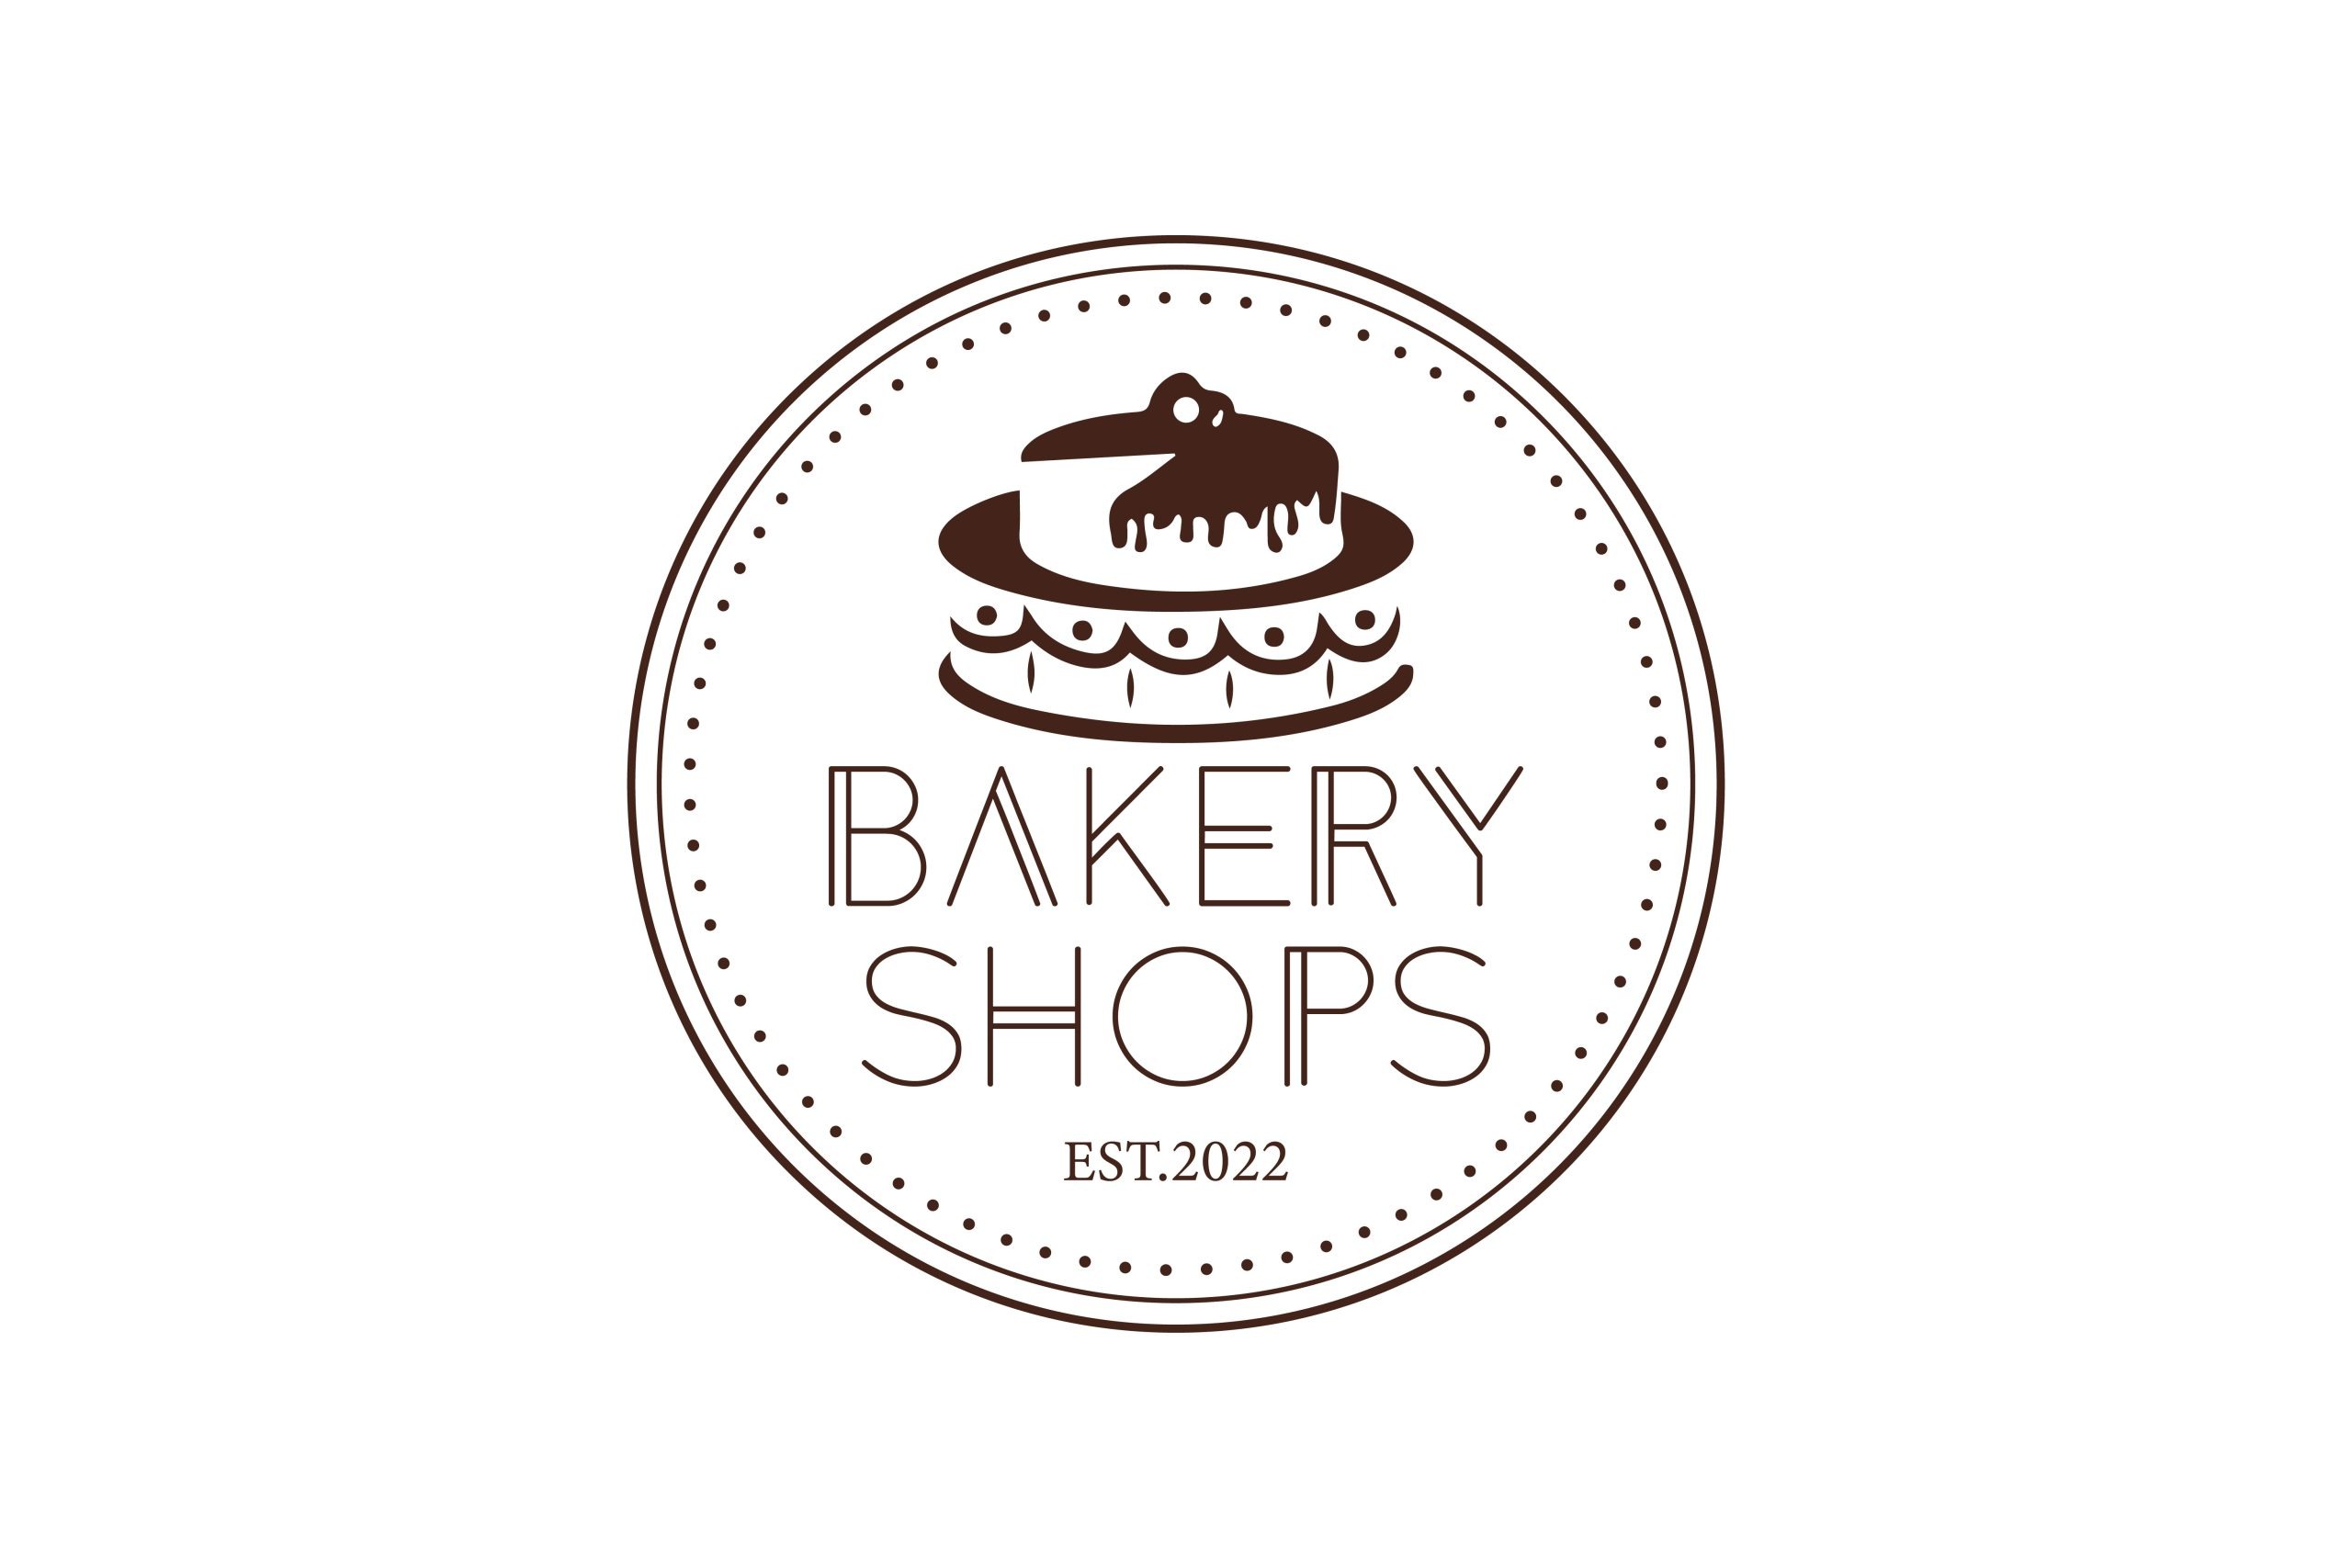 Vintage bakery logo free download